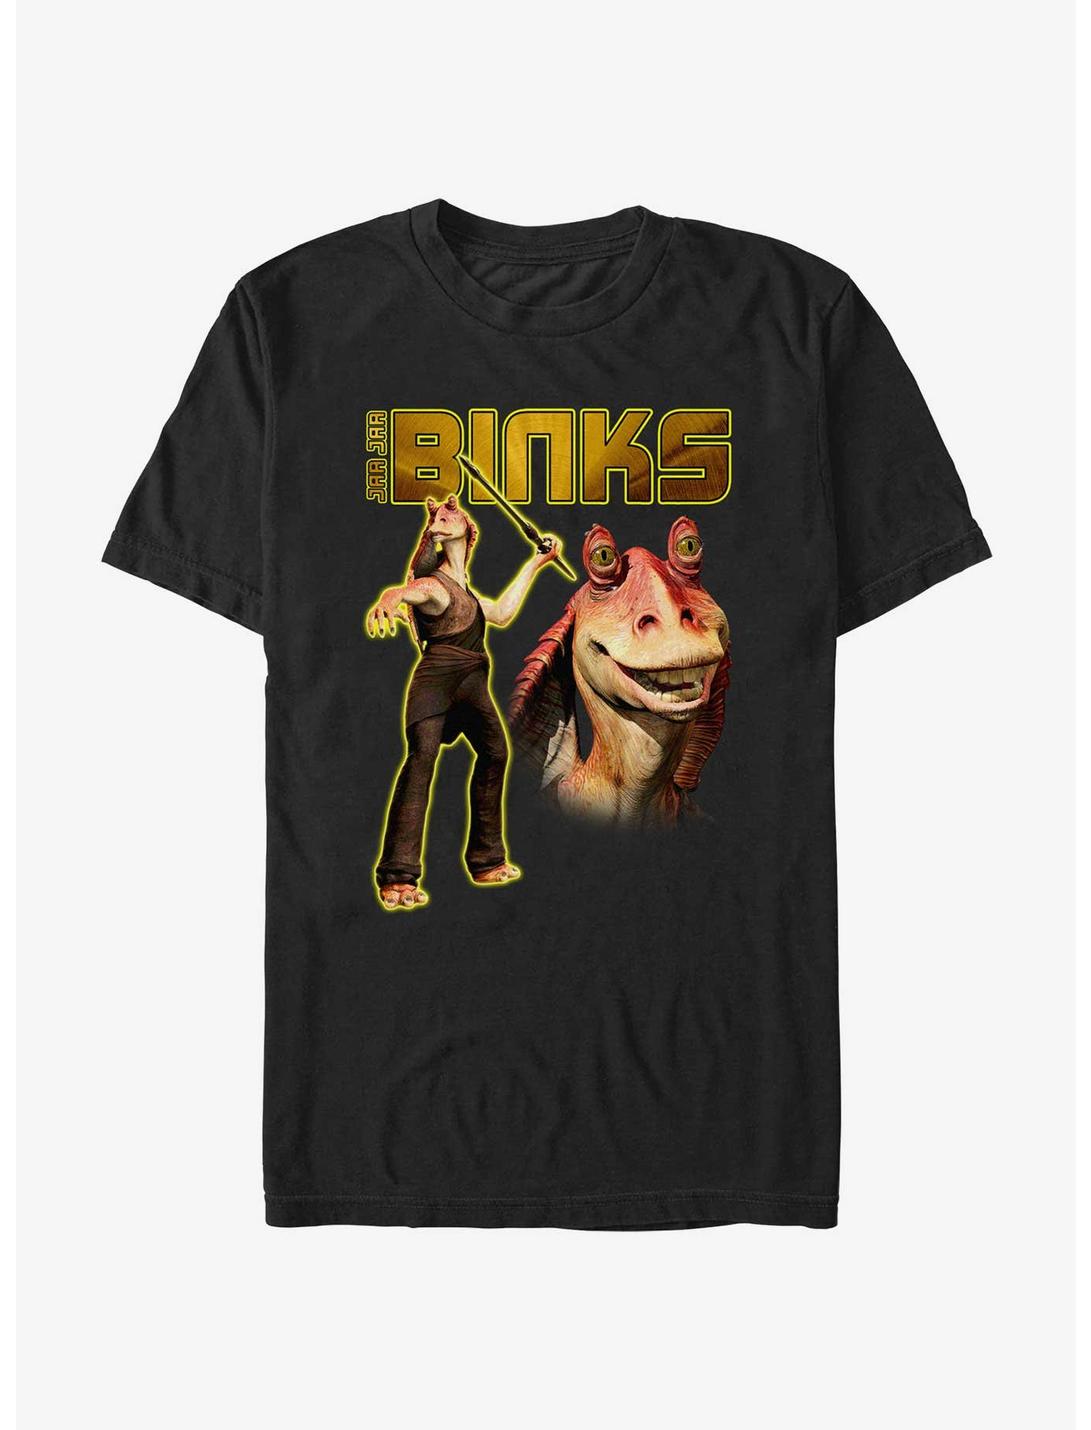 Star Wars Jar Jar Binks T-Shirt, BLACK, hi-res